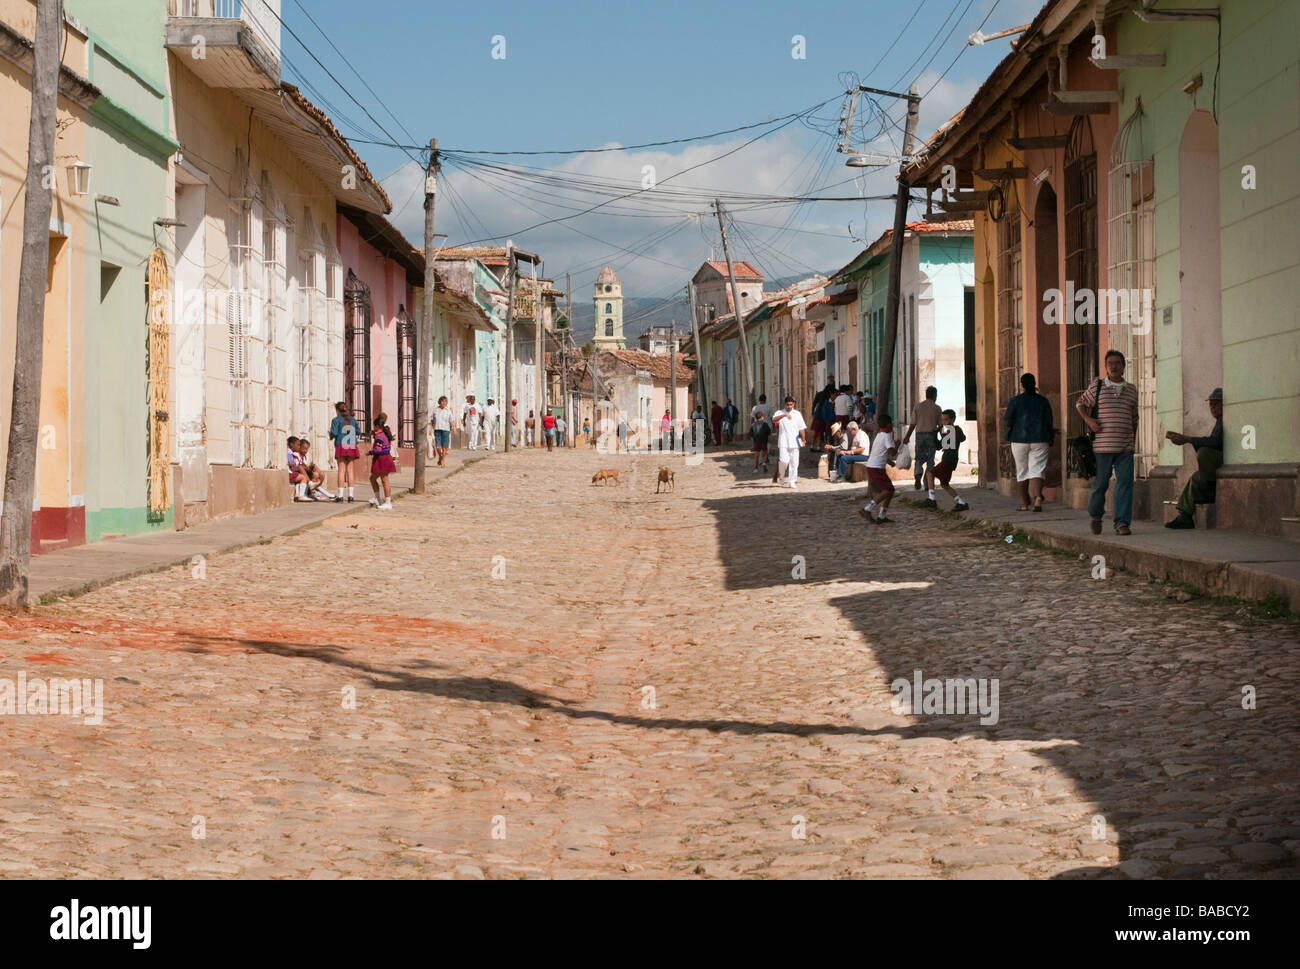 Street scene in the colonial village of Trinidad, Cuba. Stock Photo